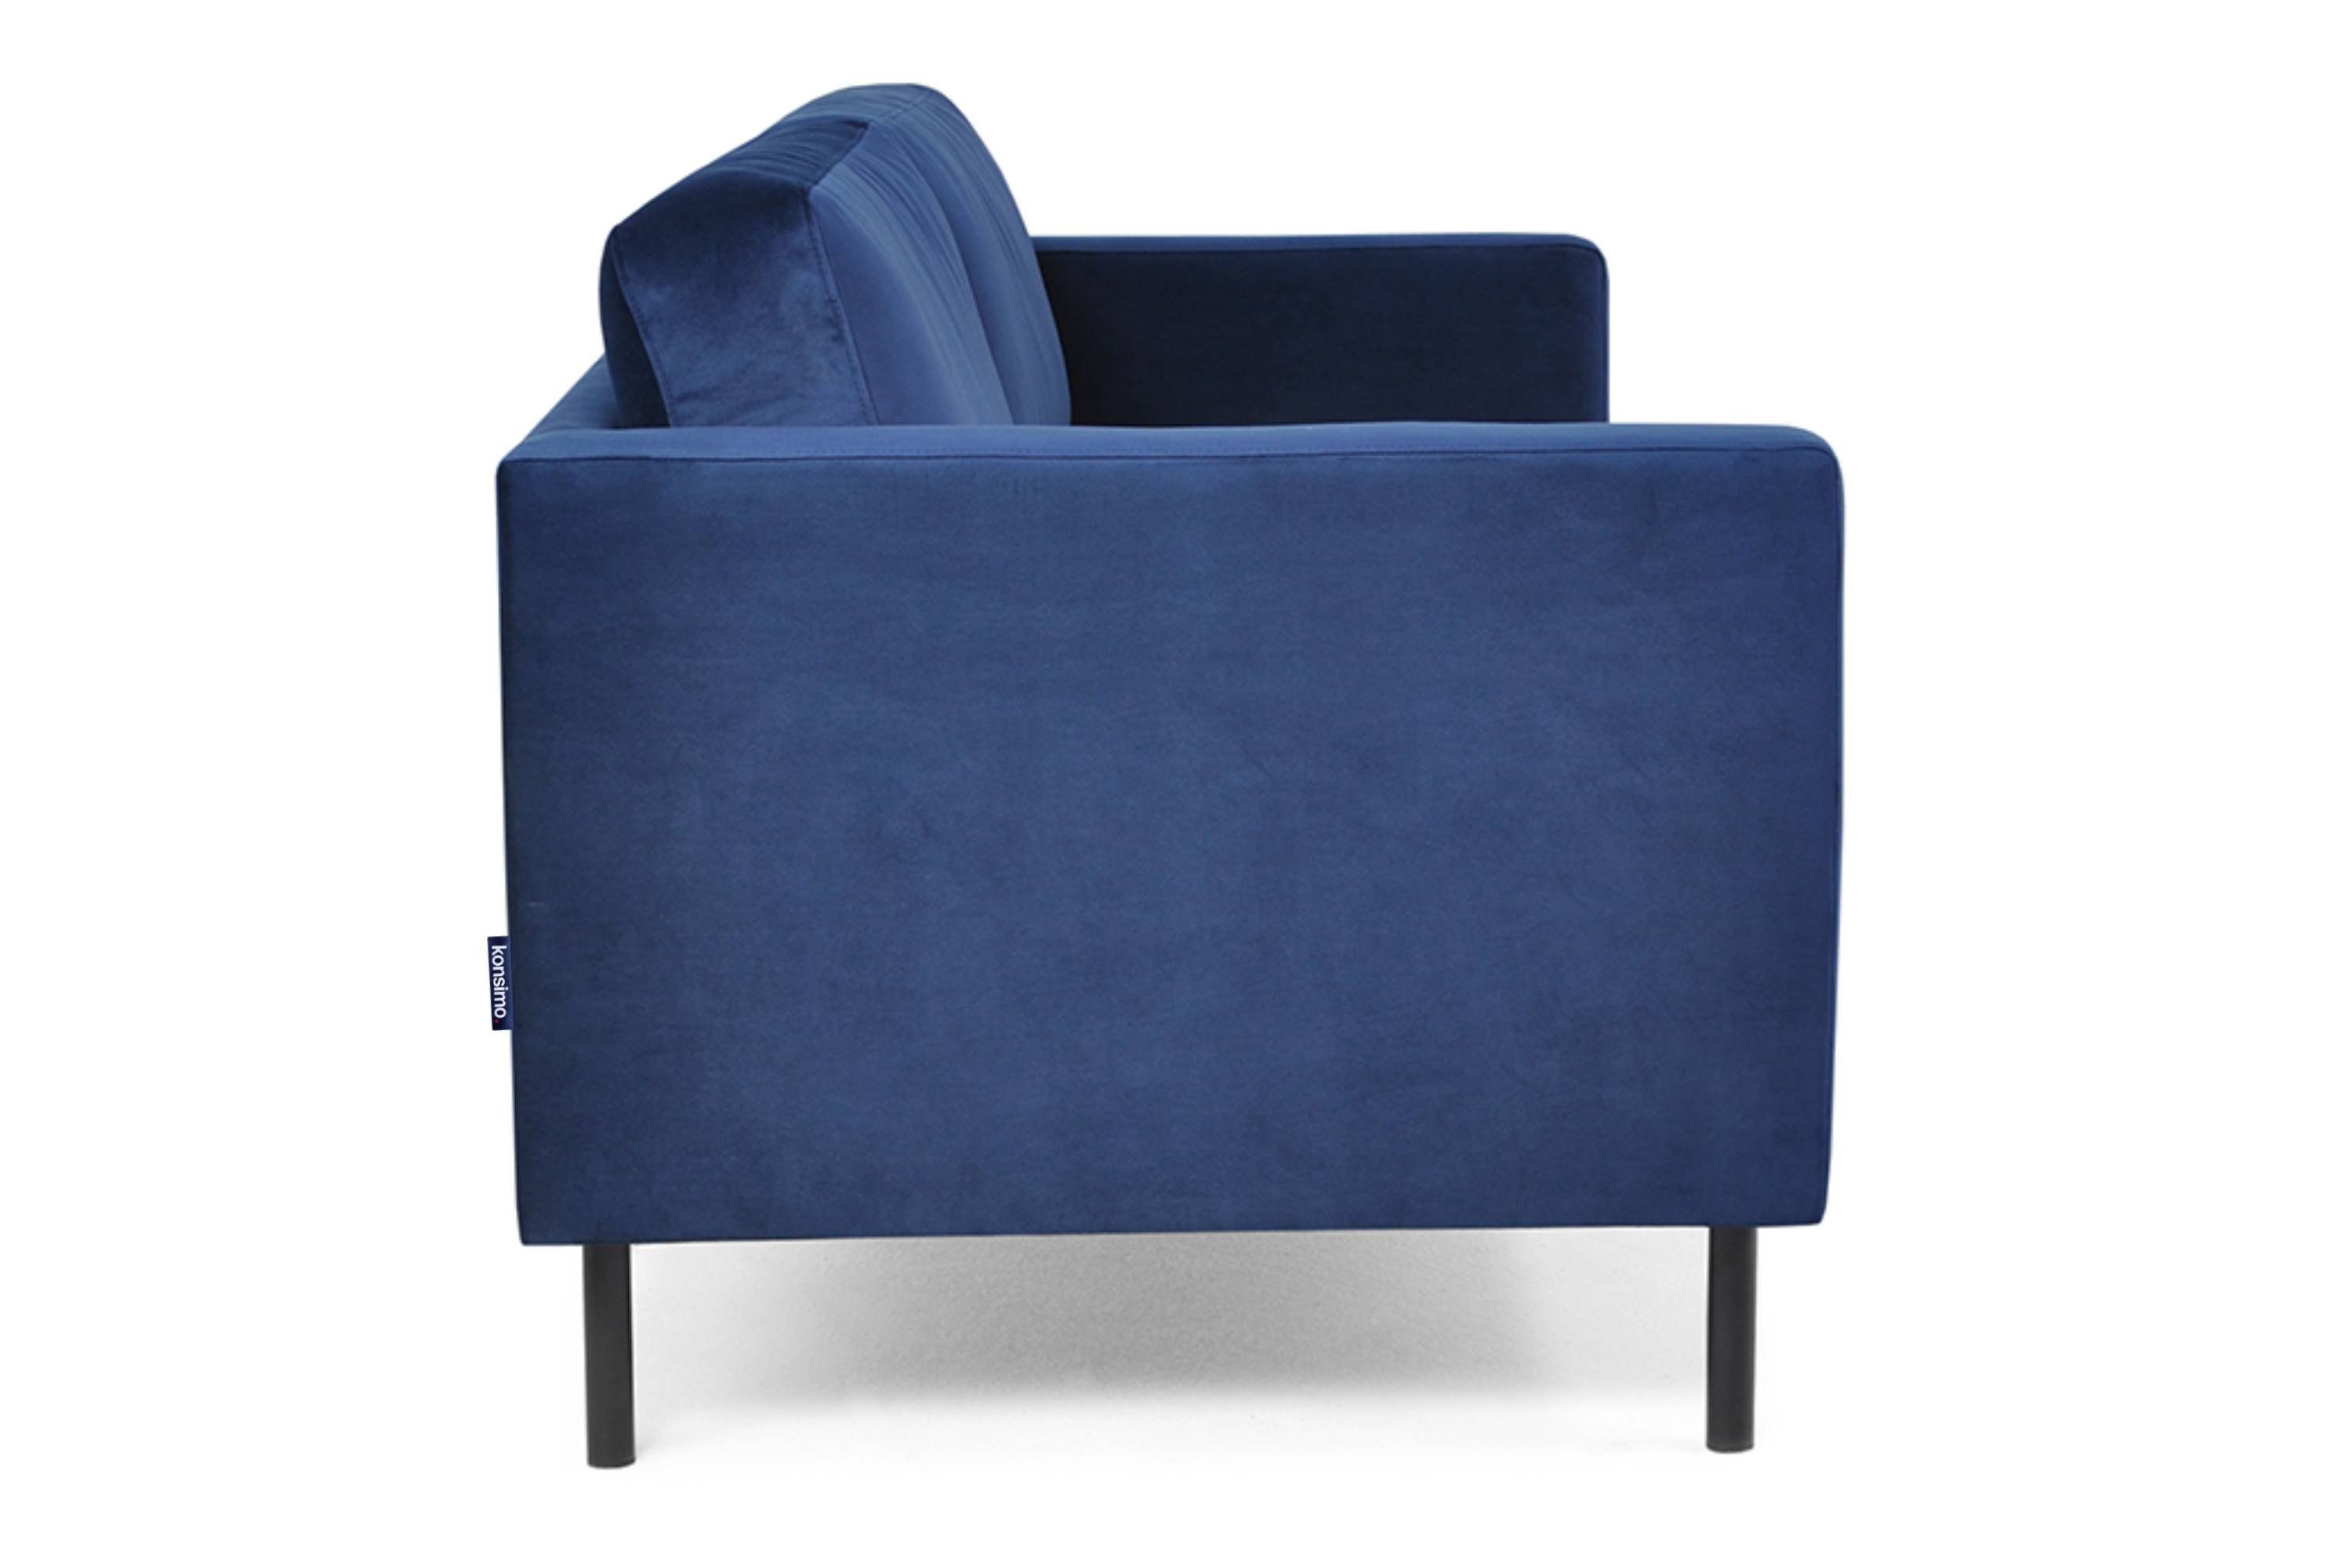 Design TOZZI marineblau universelles Konsimo marineblau | Sofa, marineblau 2,5-Sitzer | hohe Beine,